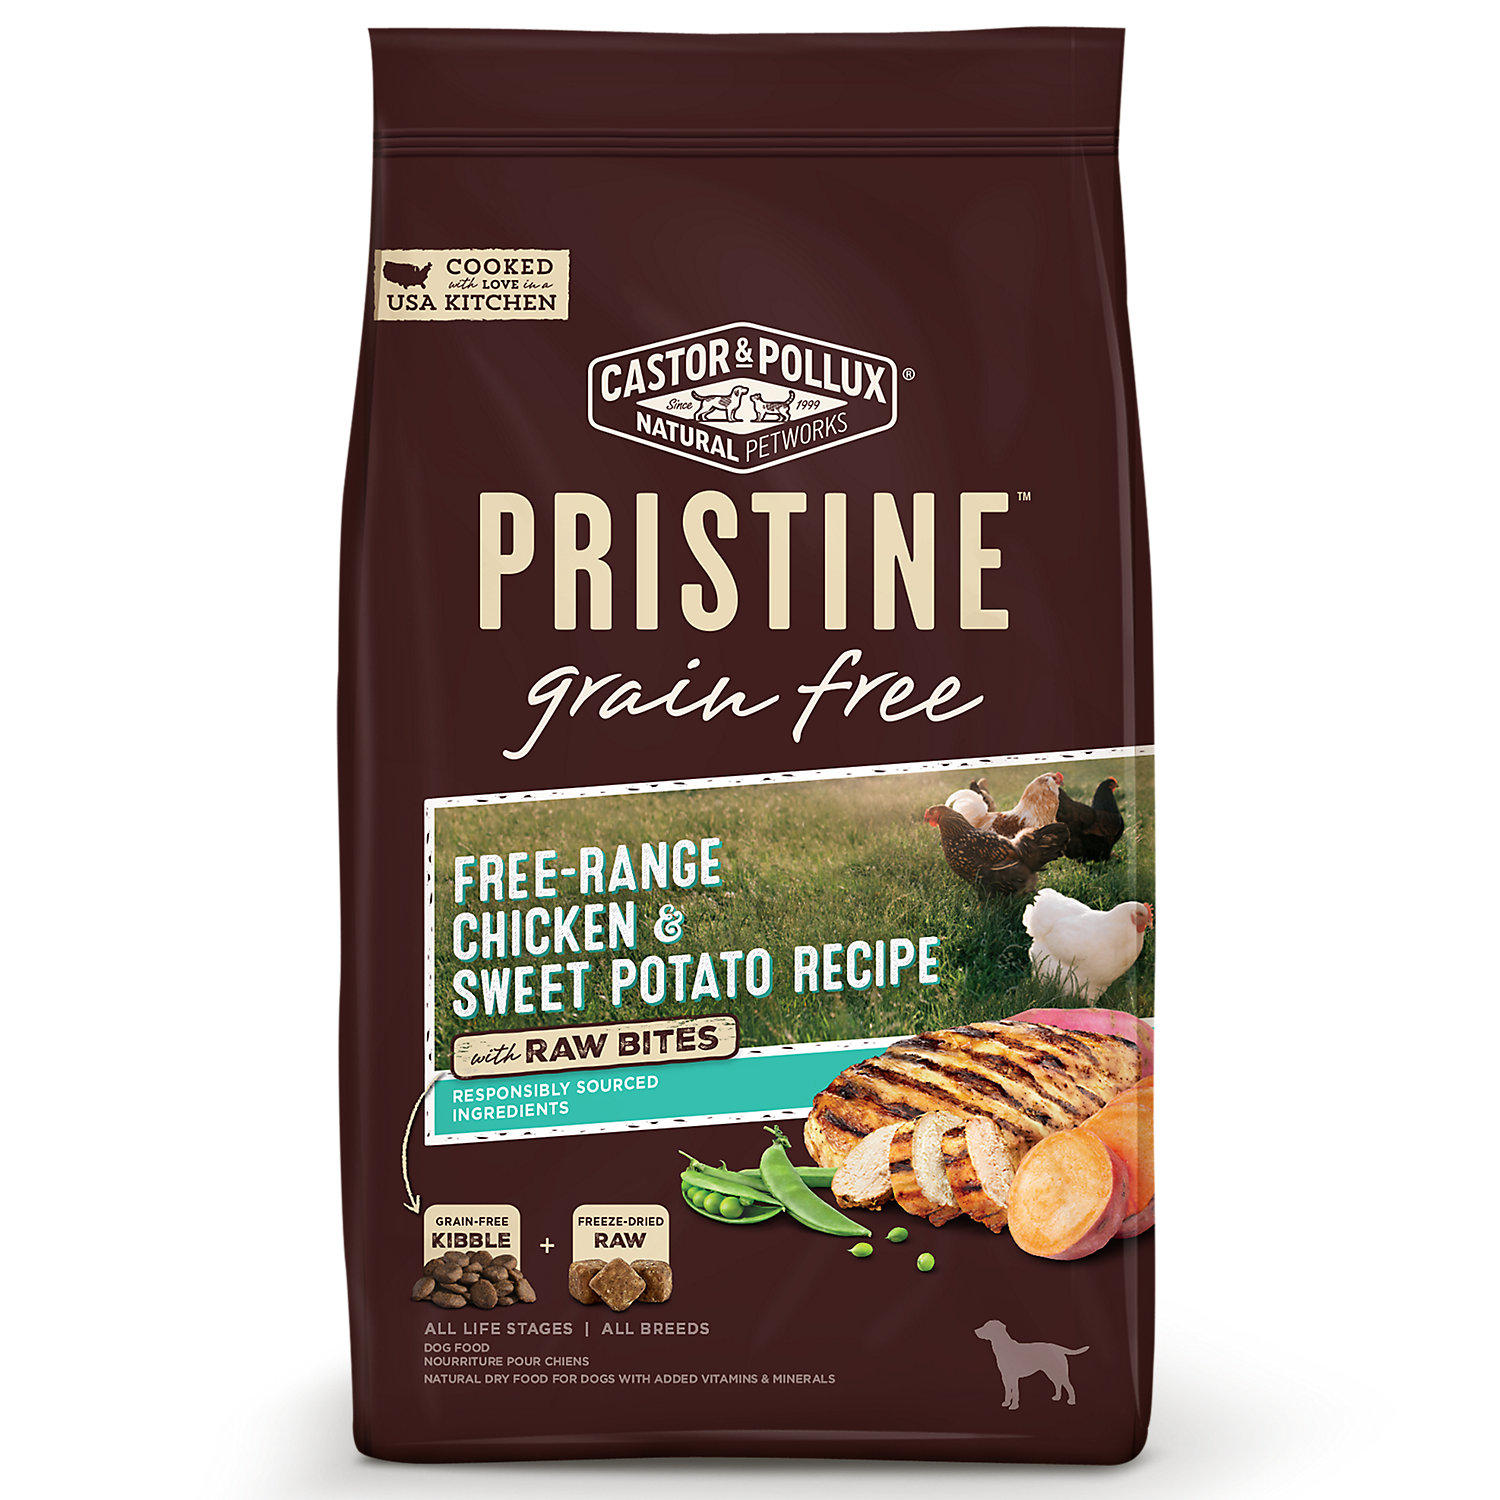 Castor & Pollux Pristine Grain Free Free-Range Chicken and Sweet Potato Recipe with Raw Bites Dry Dog Food